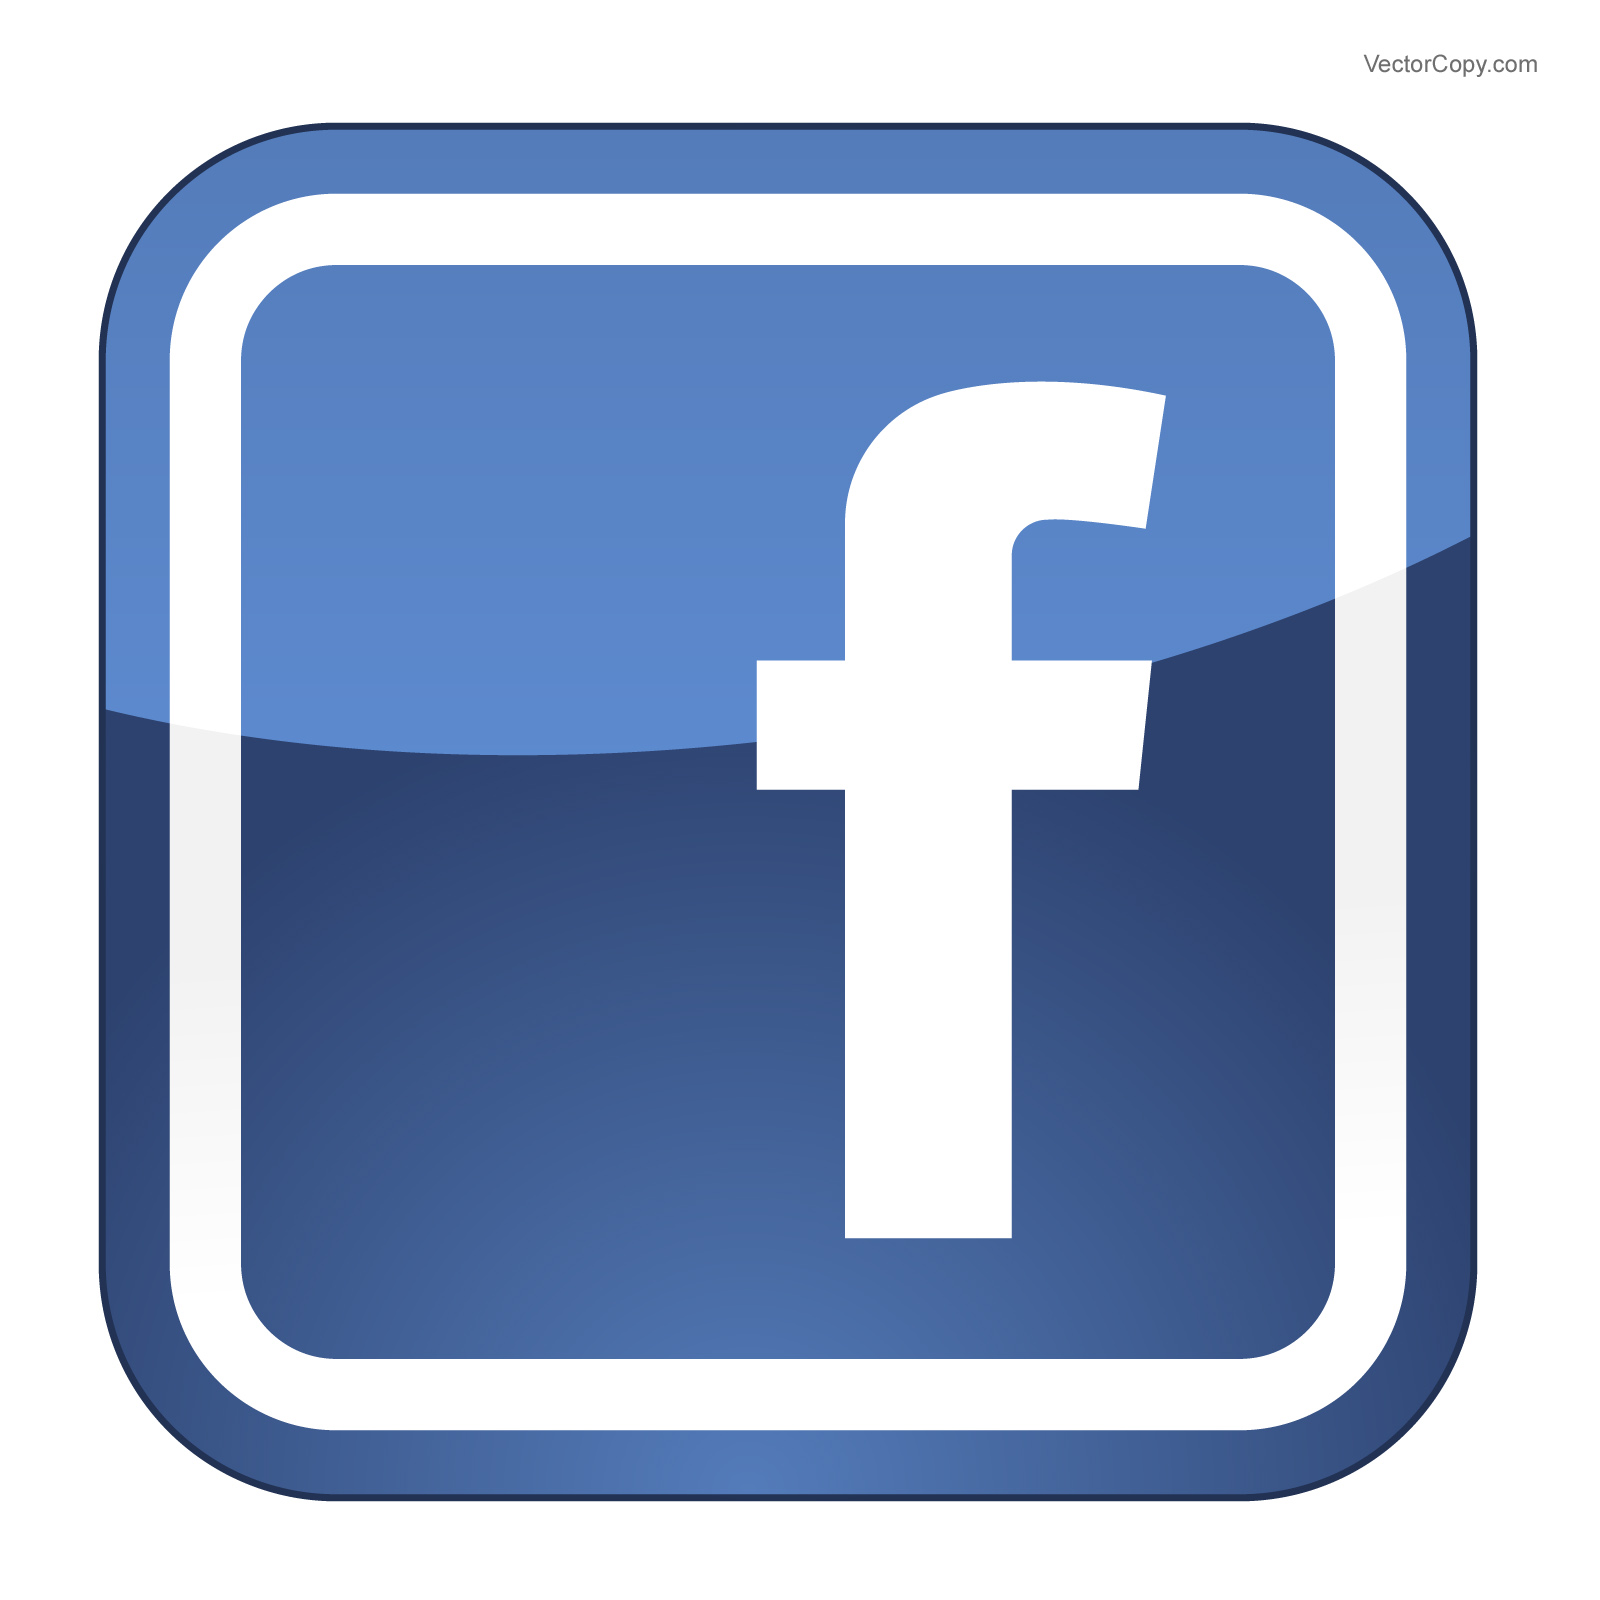 Facebook logo vector free download clipart 3 - Clipartix